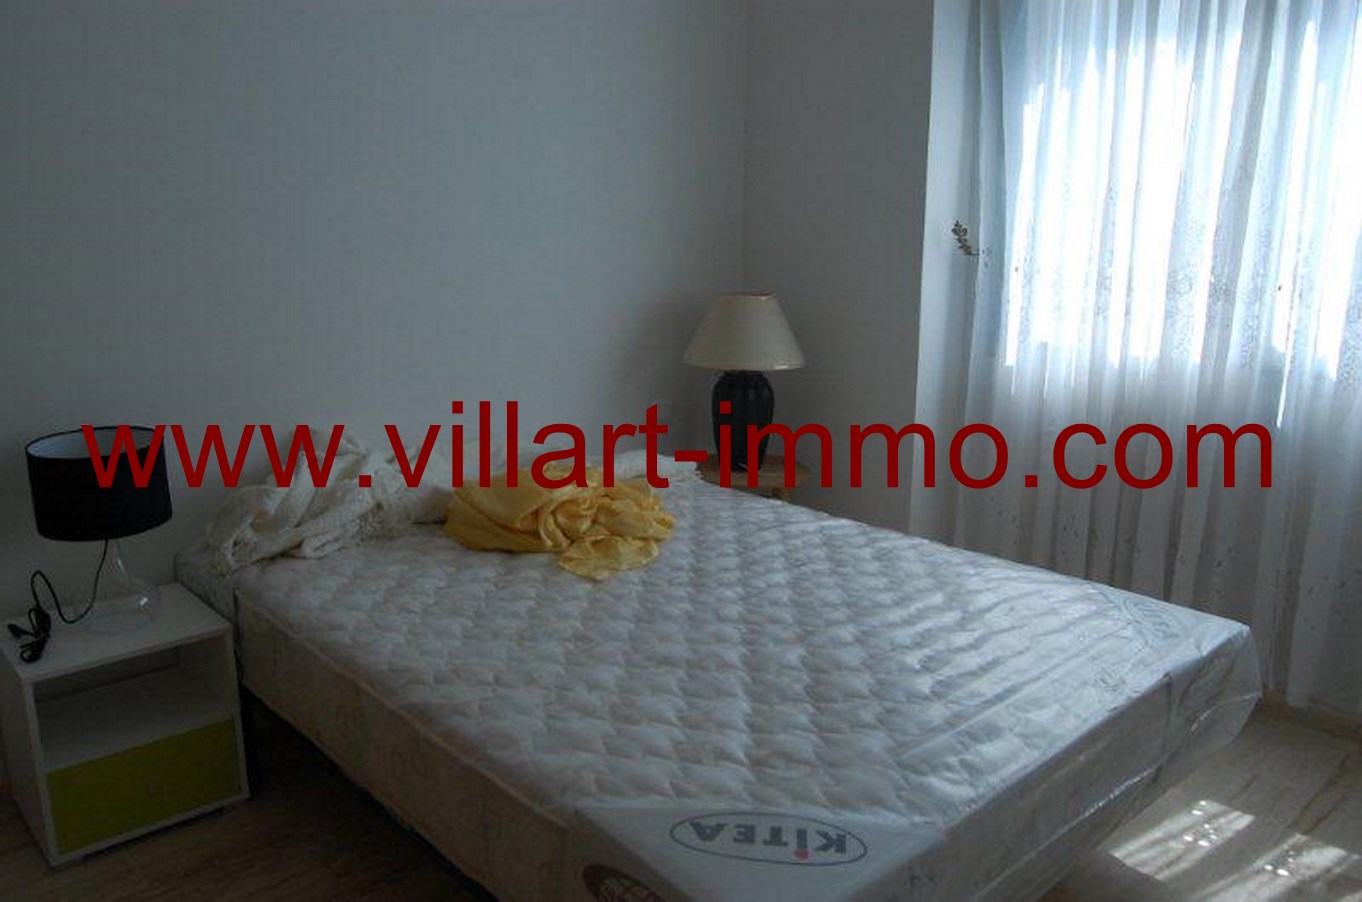 5-Location-Appartement-meublé-Tanger-chambre 1-L678-Villart-immo